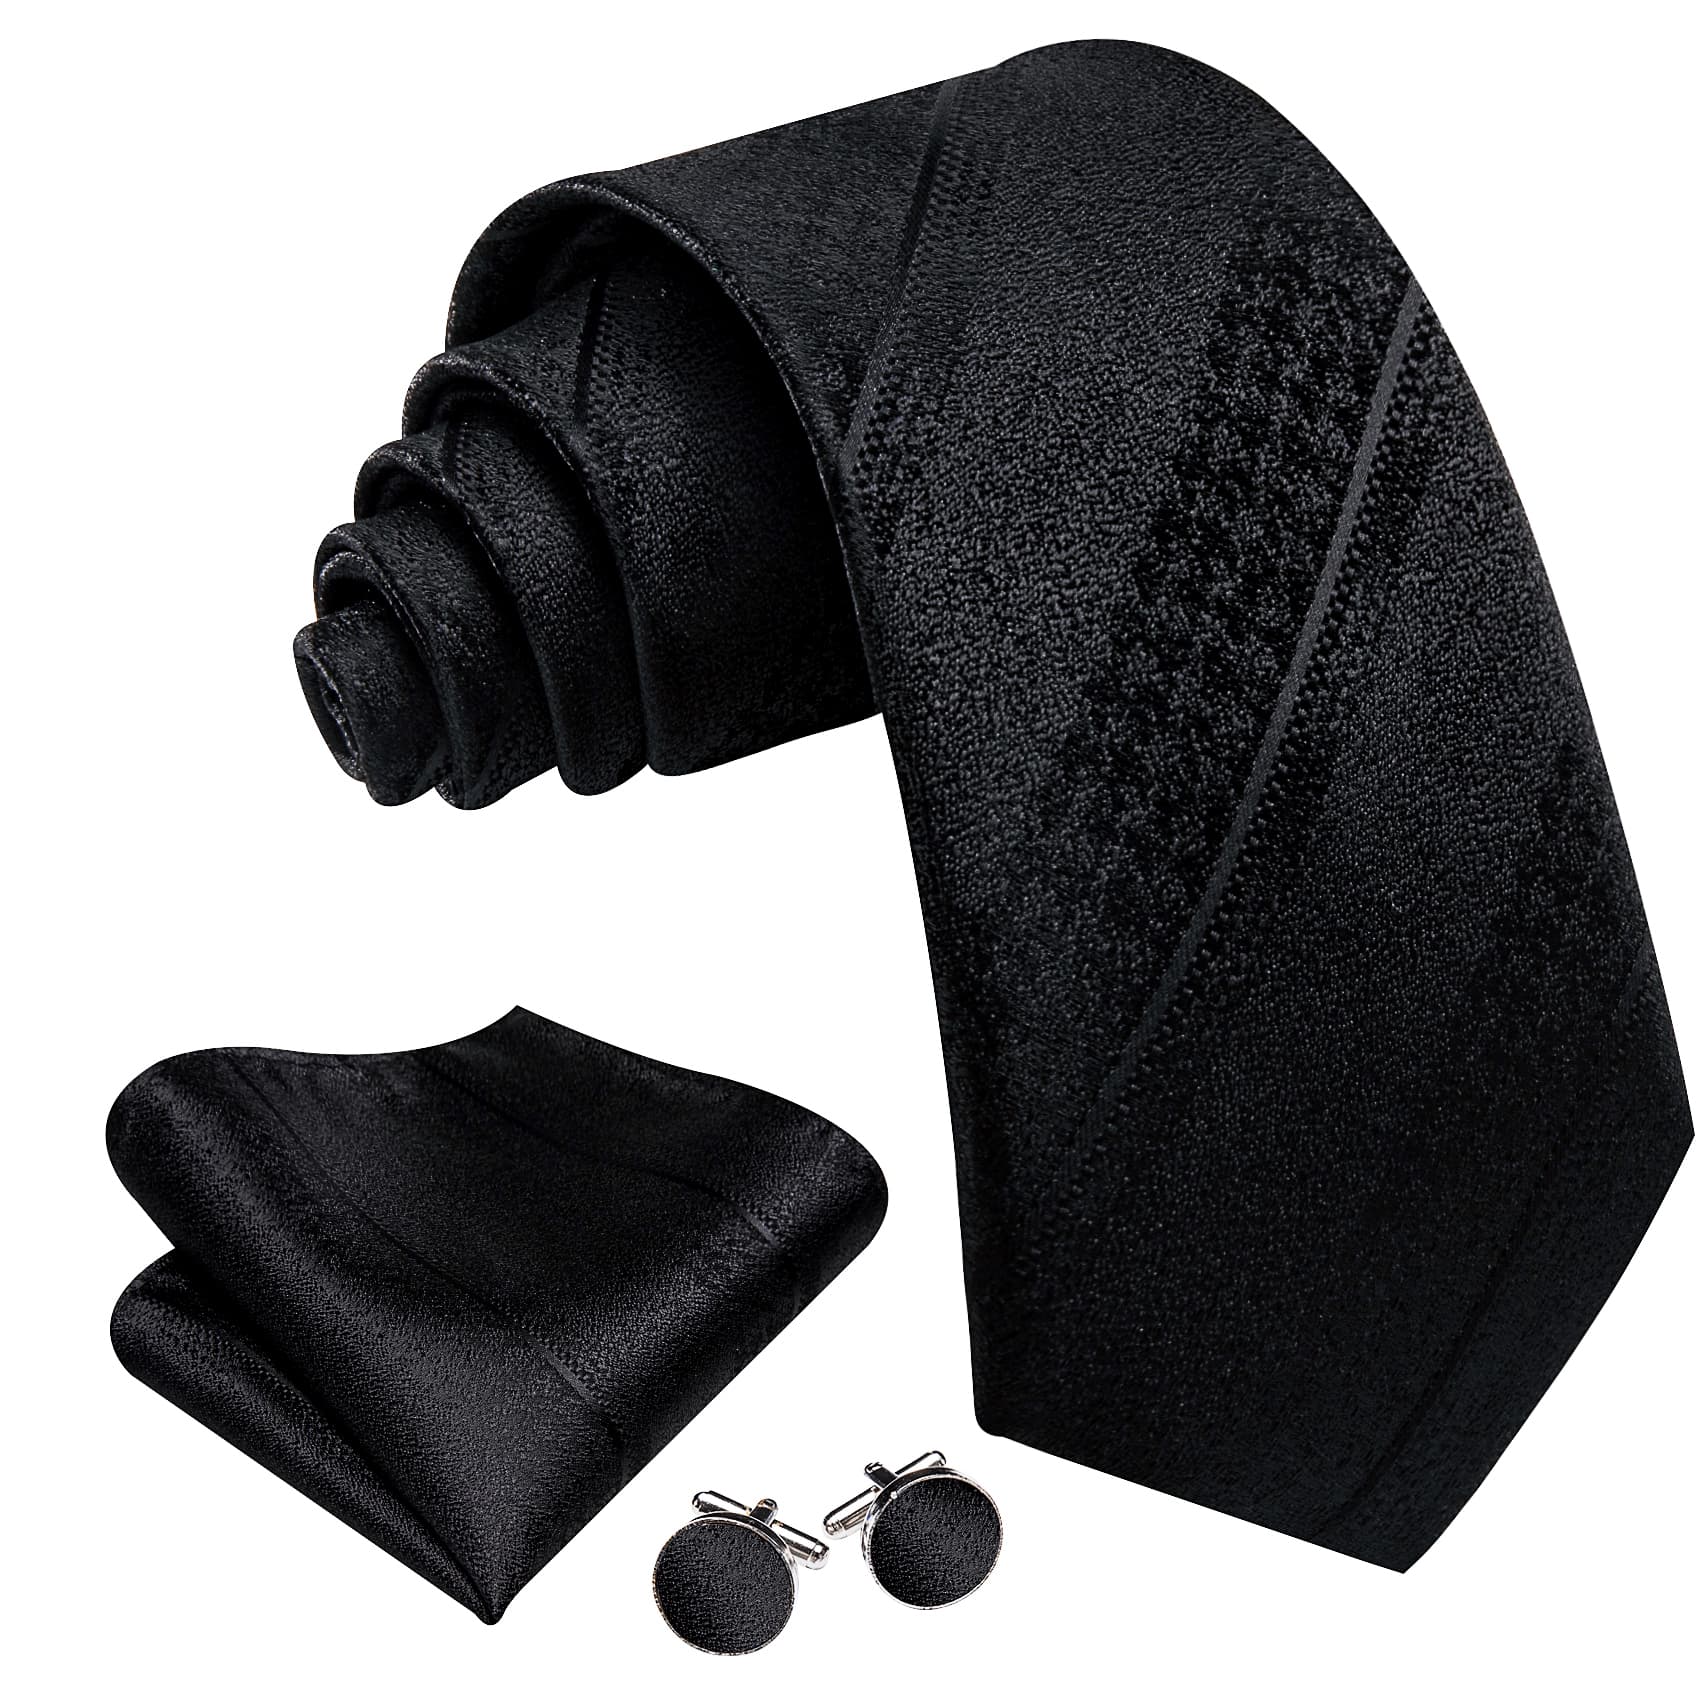 Tie Black Striped Jacquard Necktie Hanky Cufflinks Set